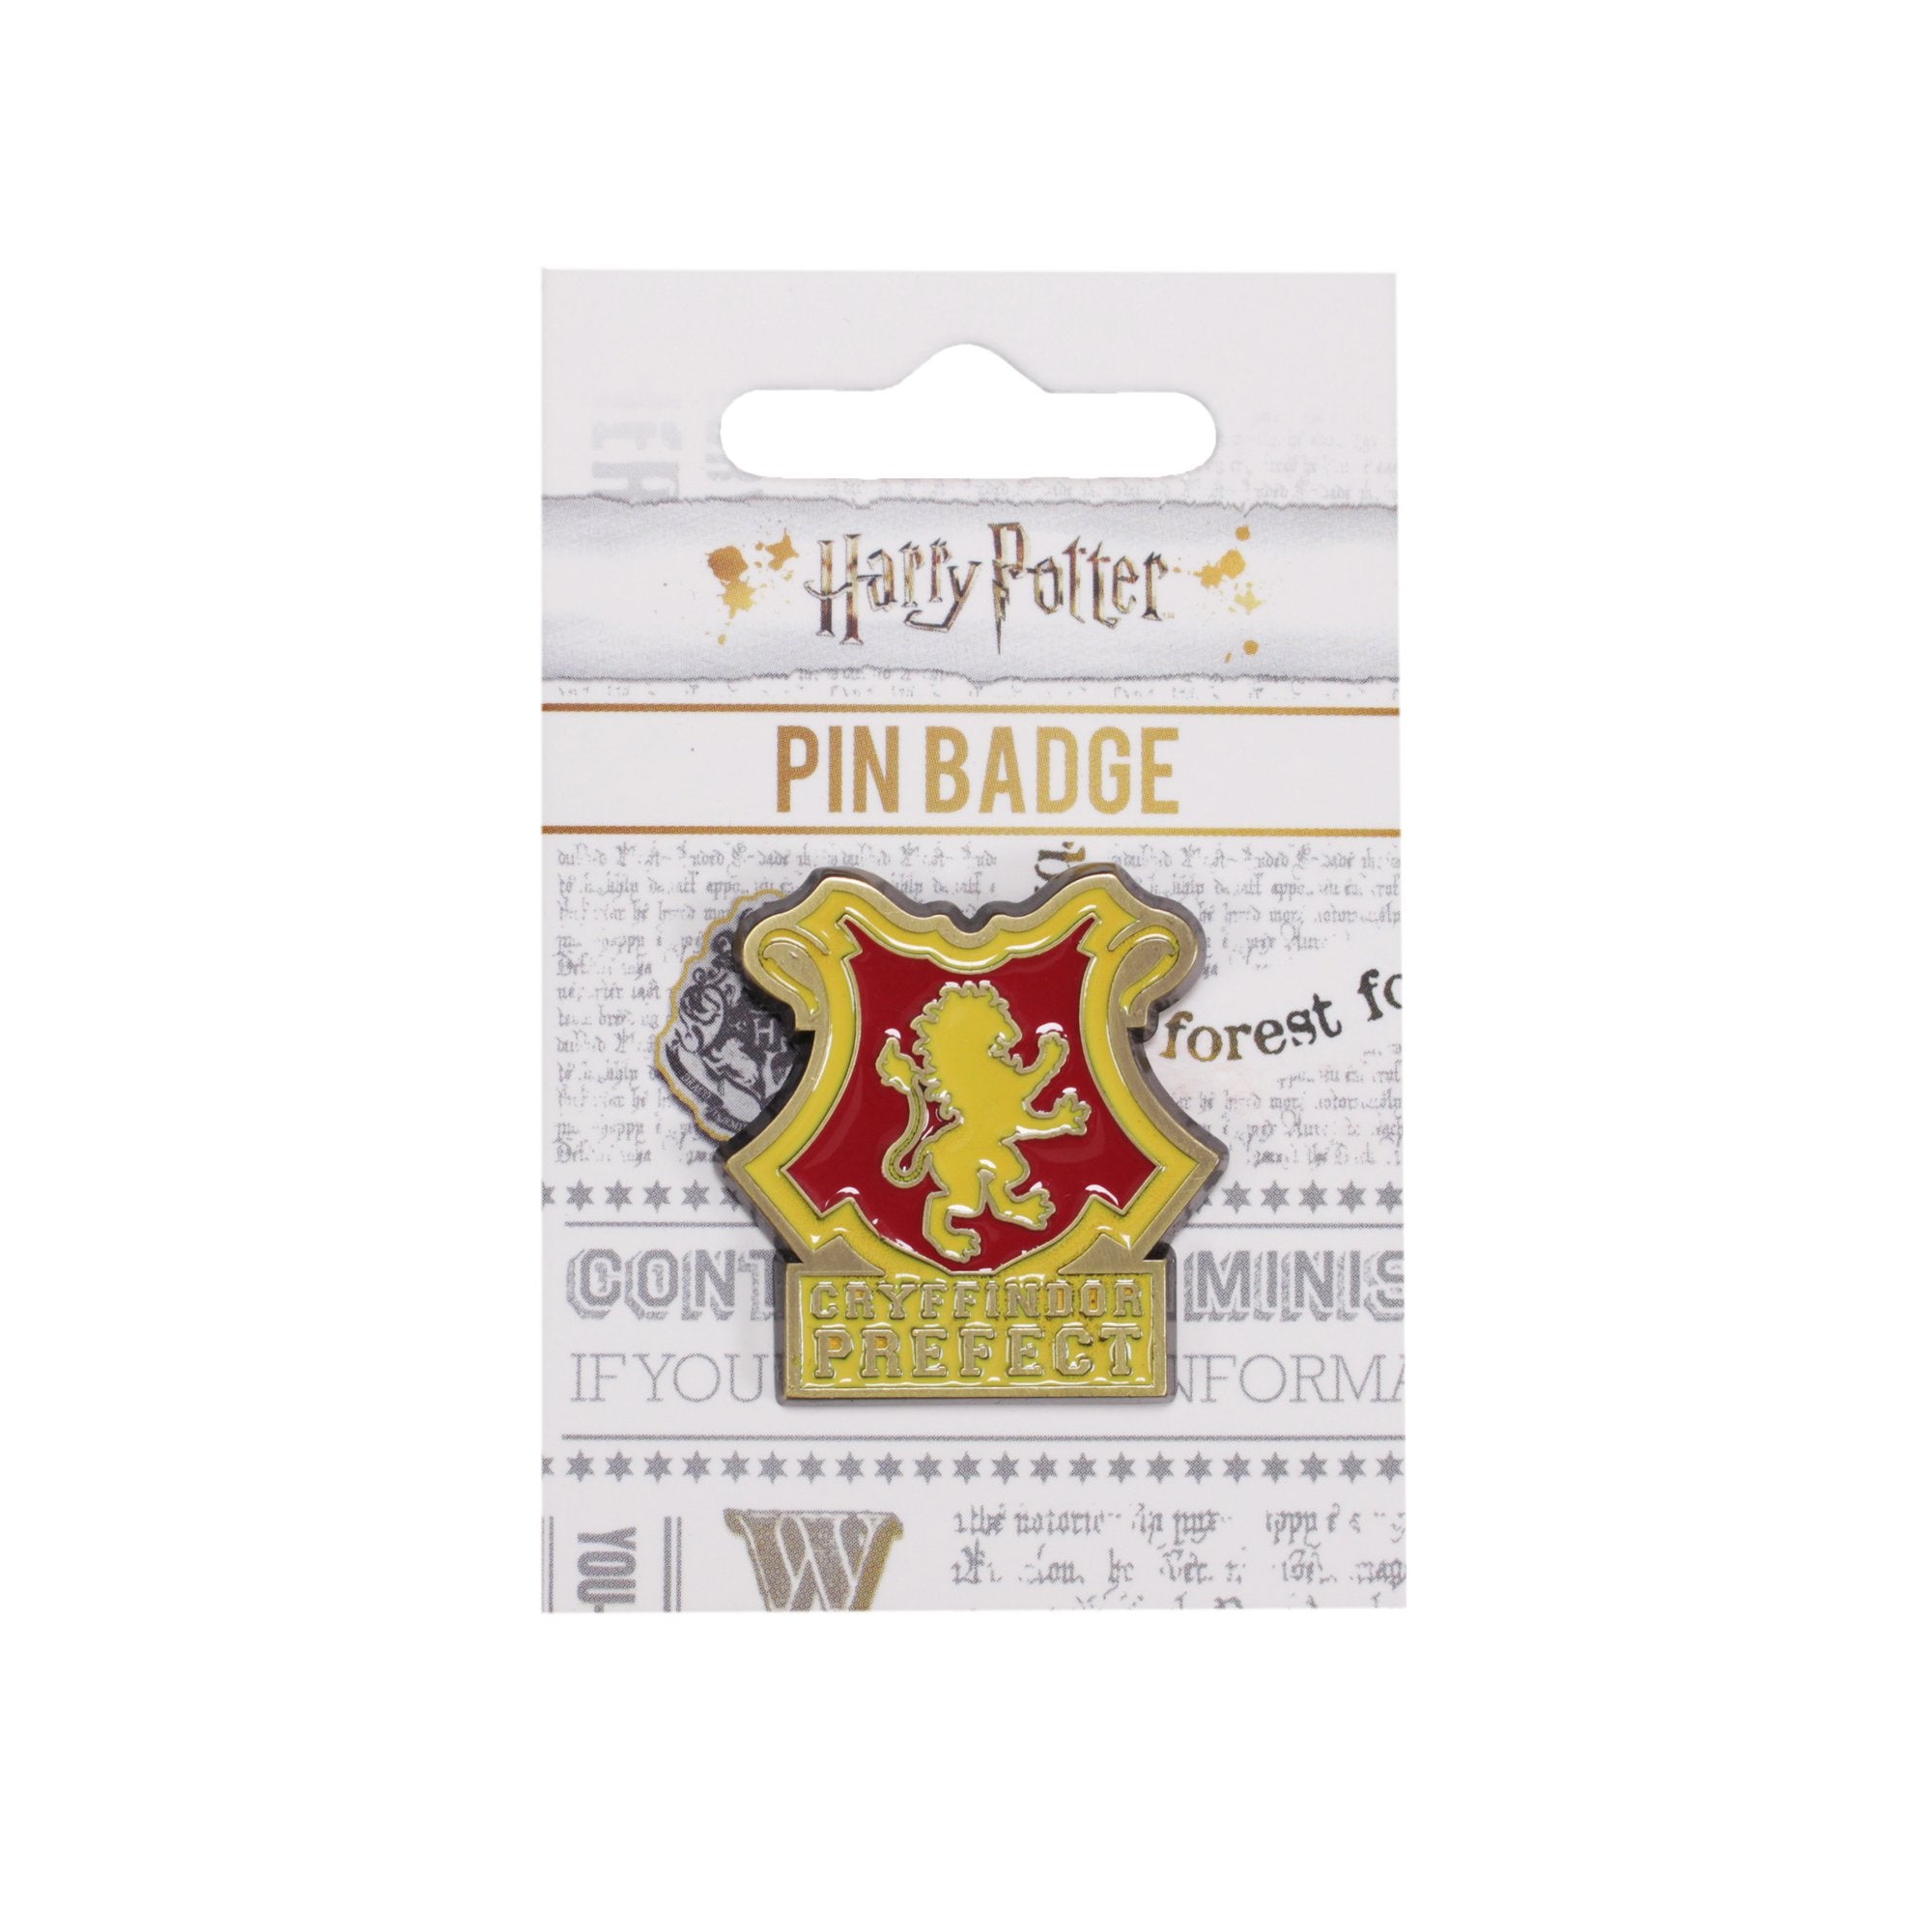 Harry Potter Pin Badge - Gryffindor Prefect